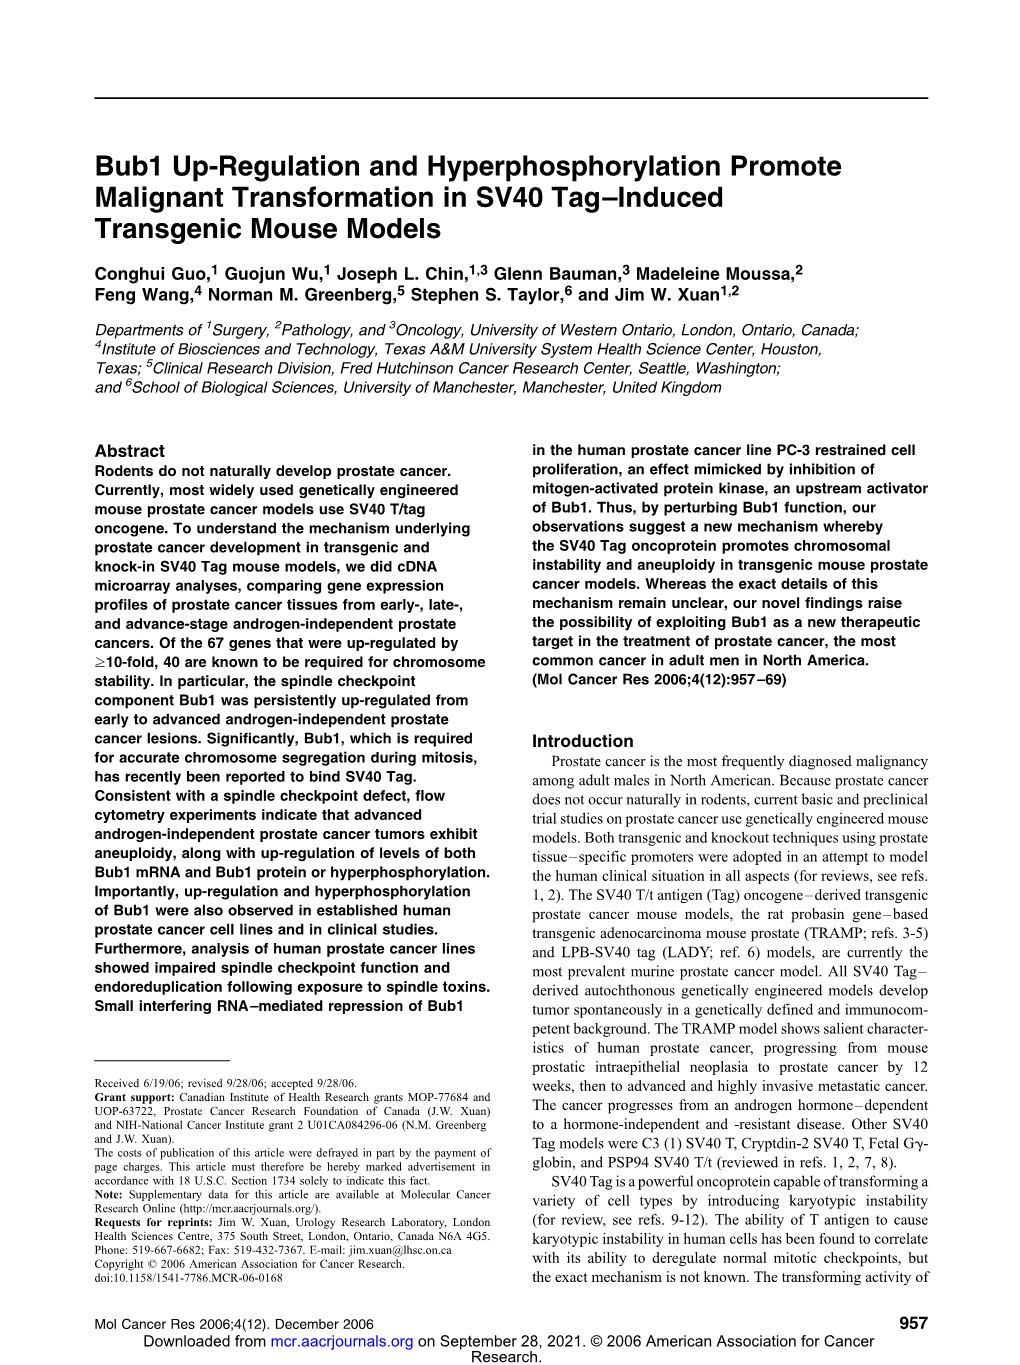 Bub1 Up-Regulation and Hyperphosphorylation Promote Malignant Transformation in SV40 Tag–Induced Transgenic Mouse Models